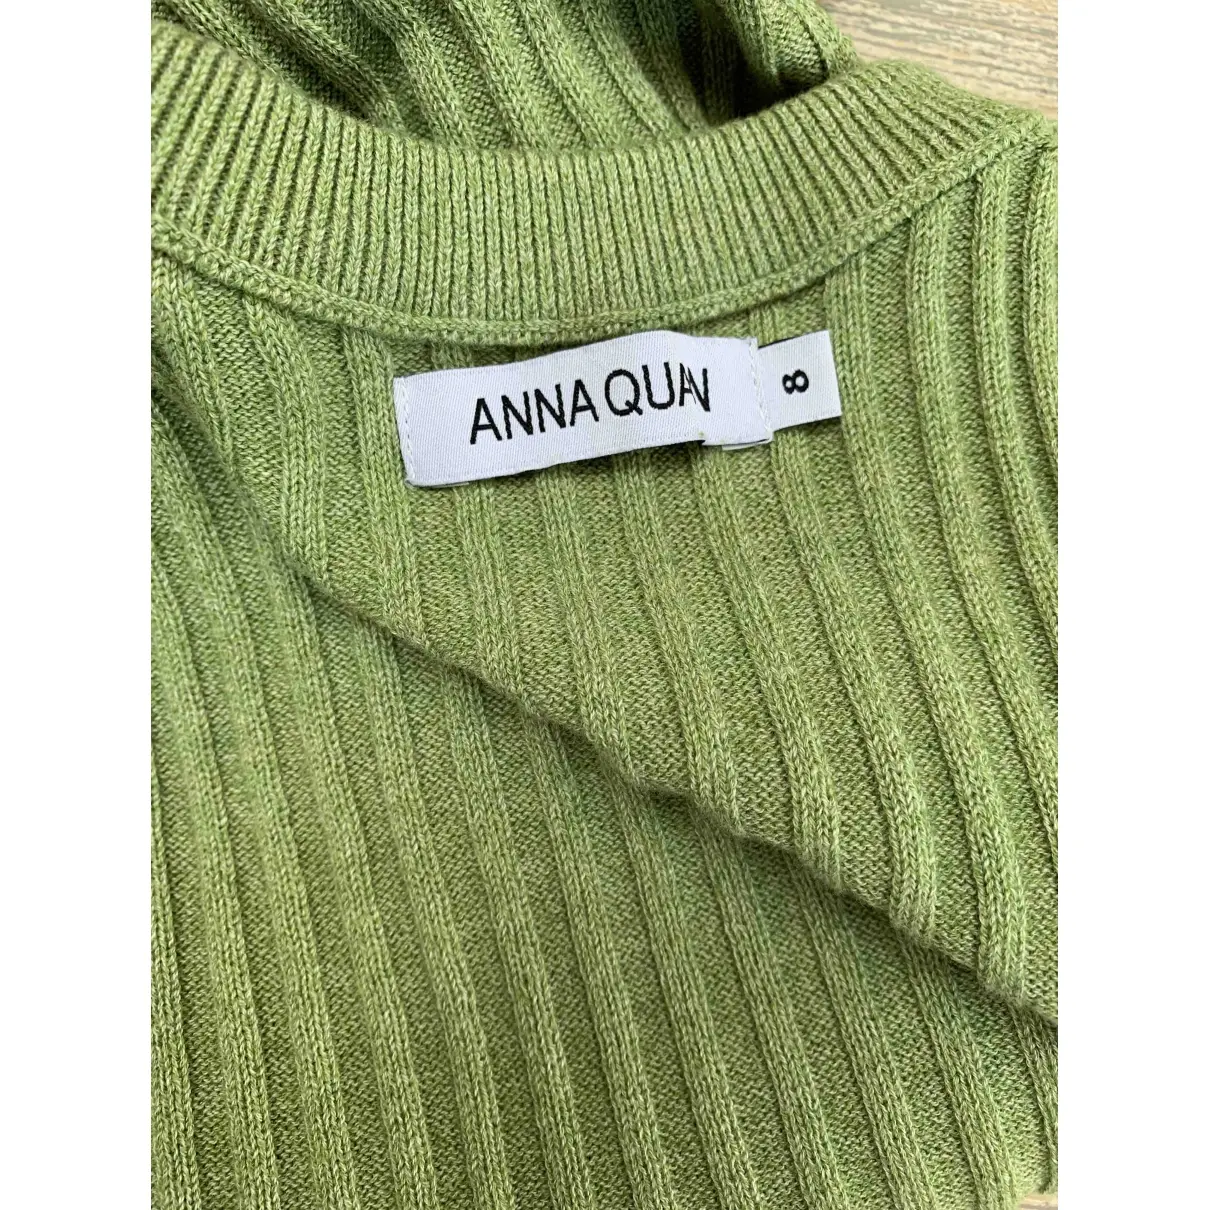 Buy Anna Quan Green Cotton Knitwear online